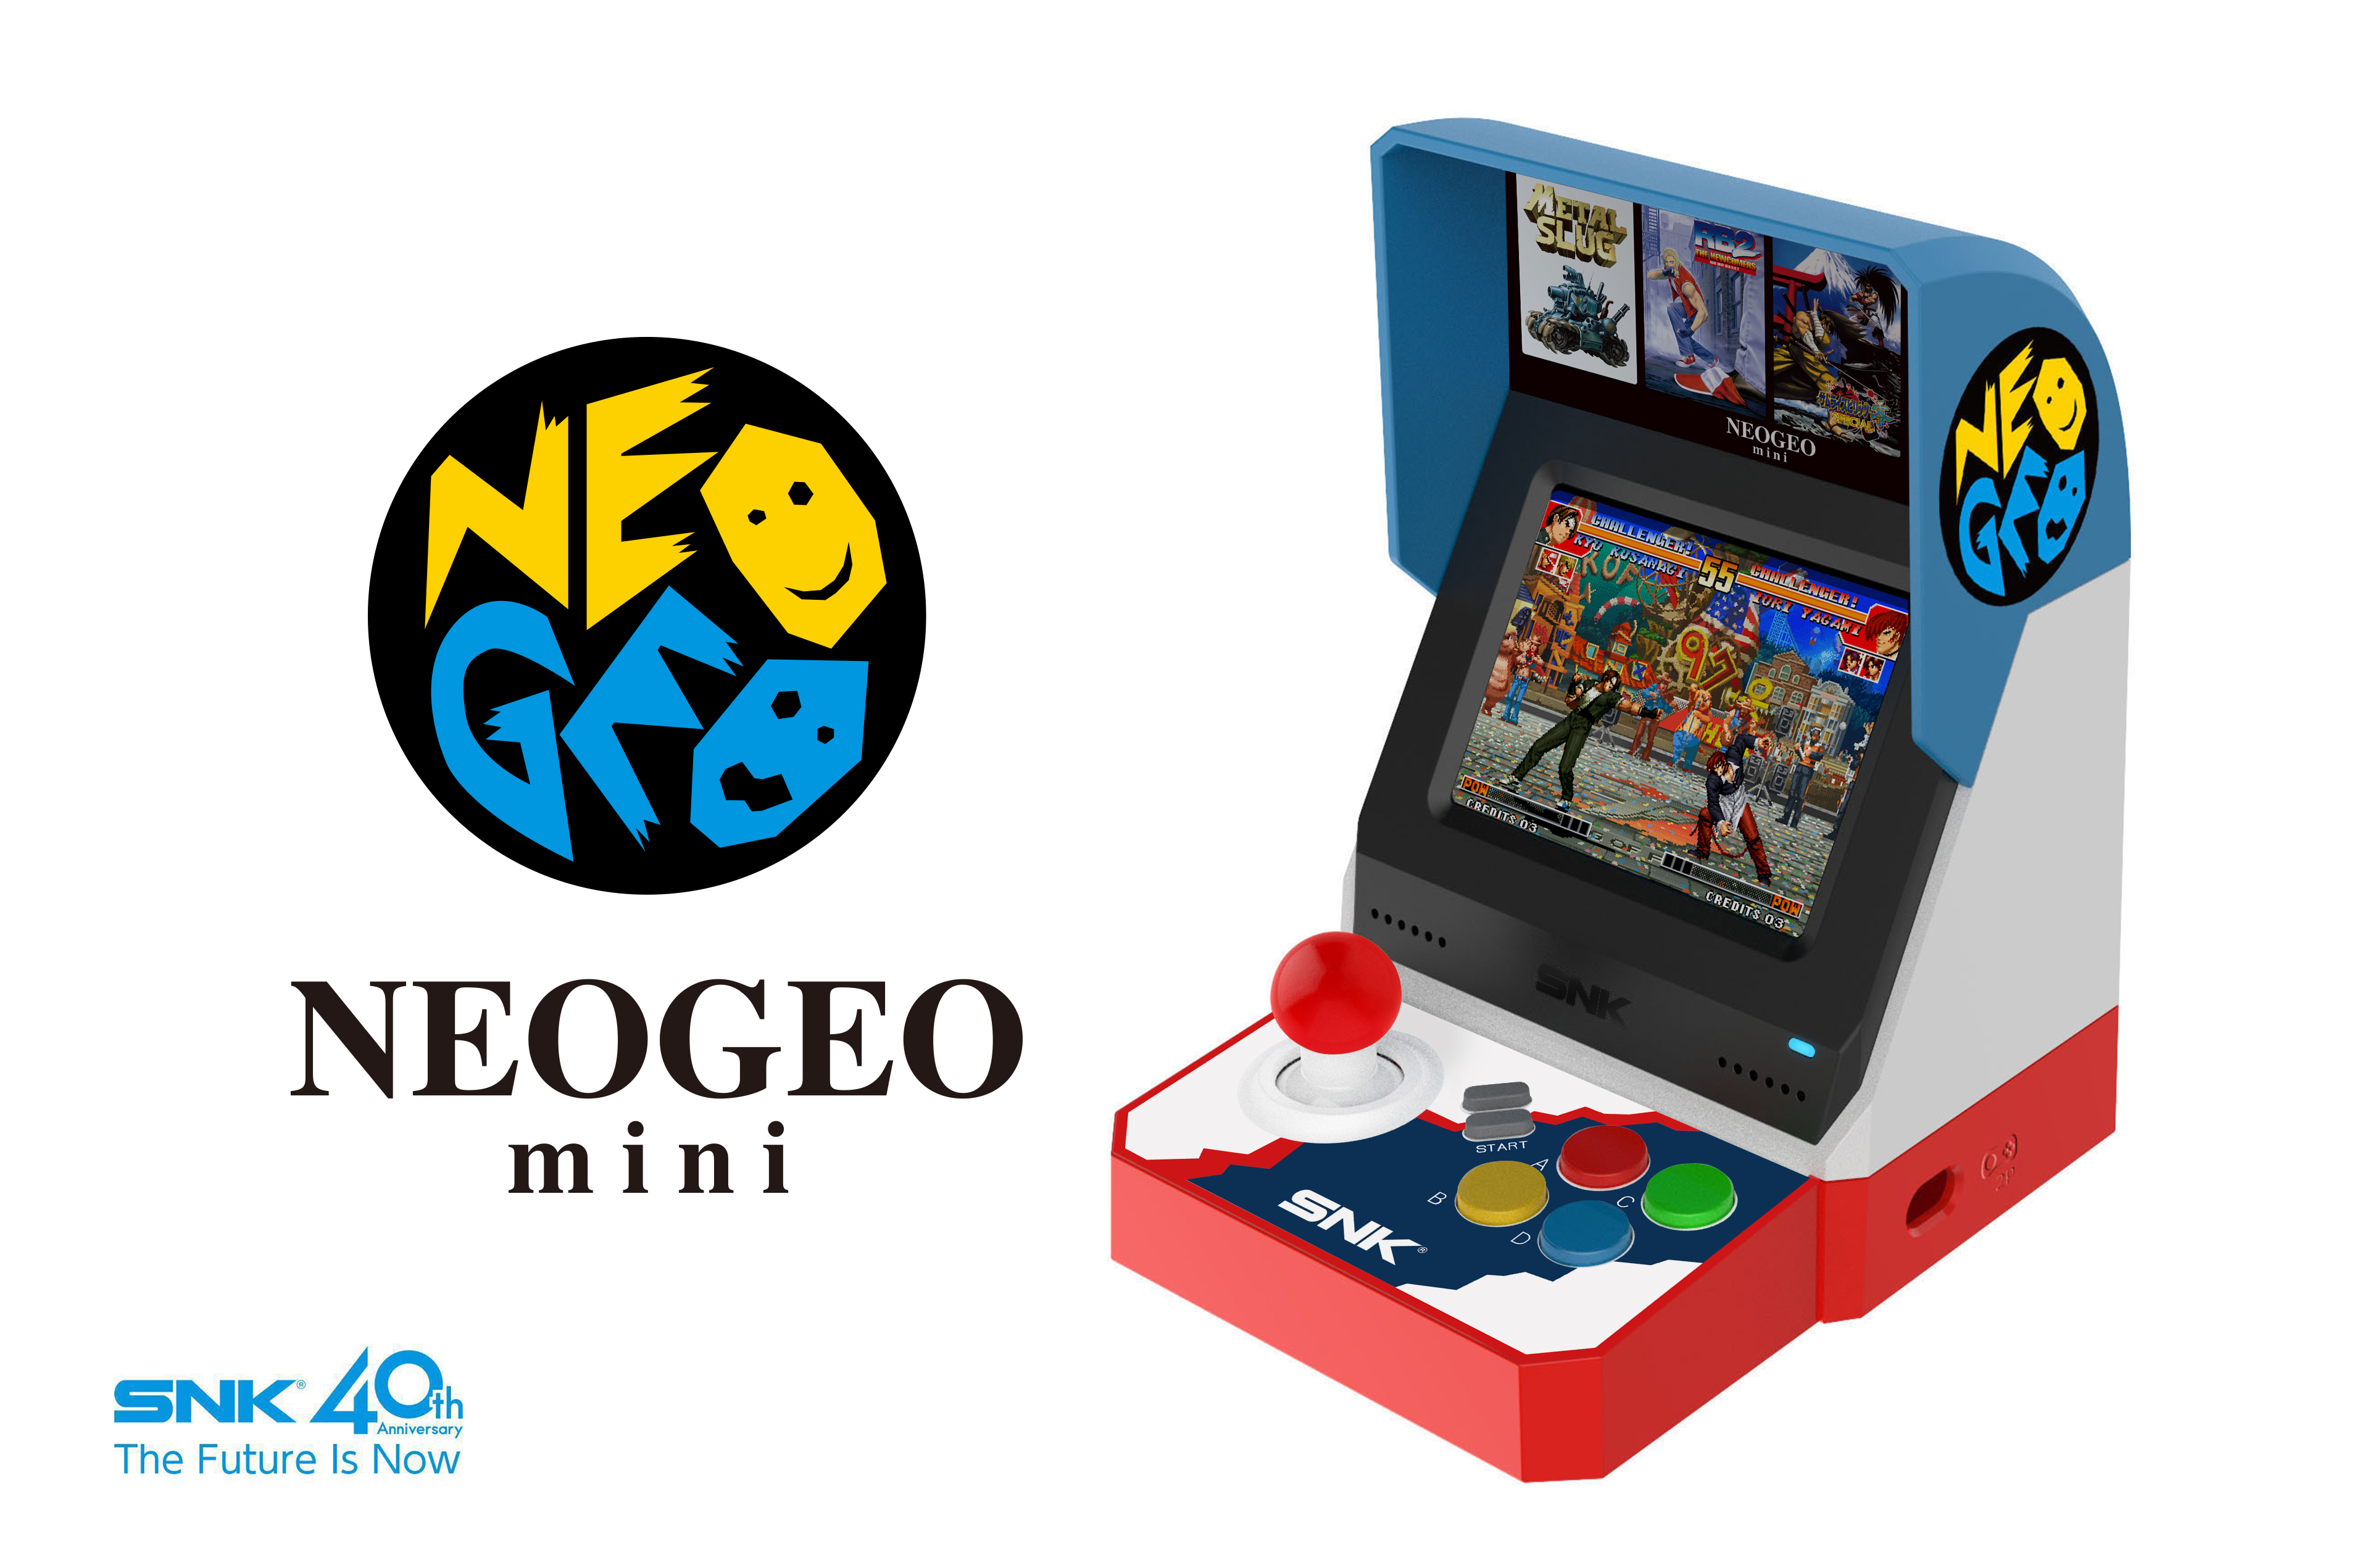 SNKブランド40周年を記念したゲーム機「NEOGEO mini」を発表！「NEOGEO ...